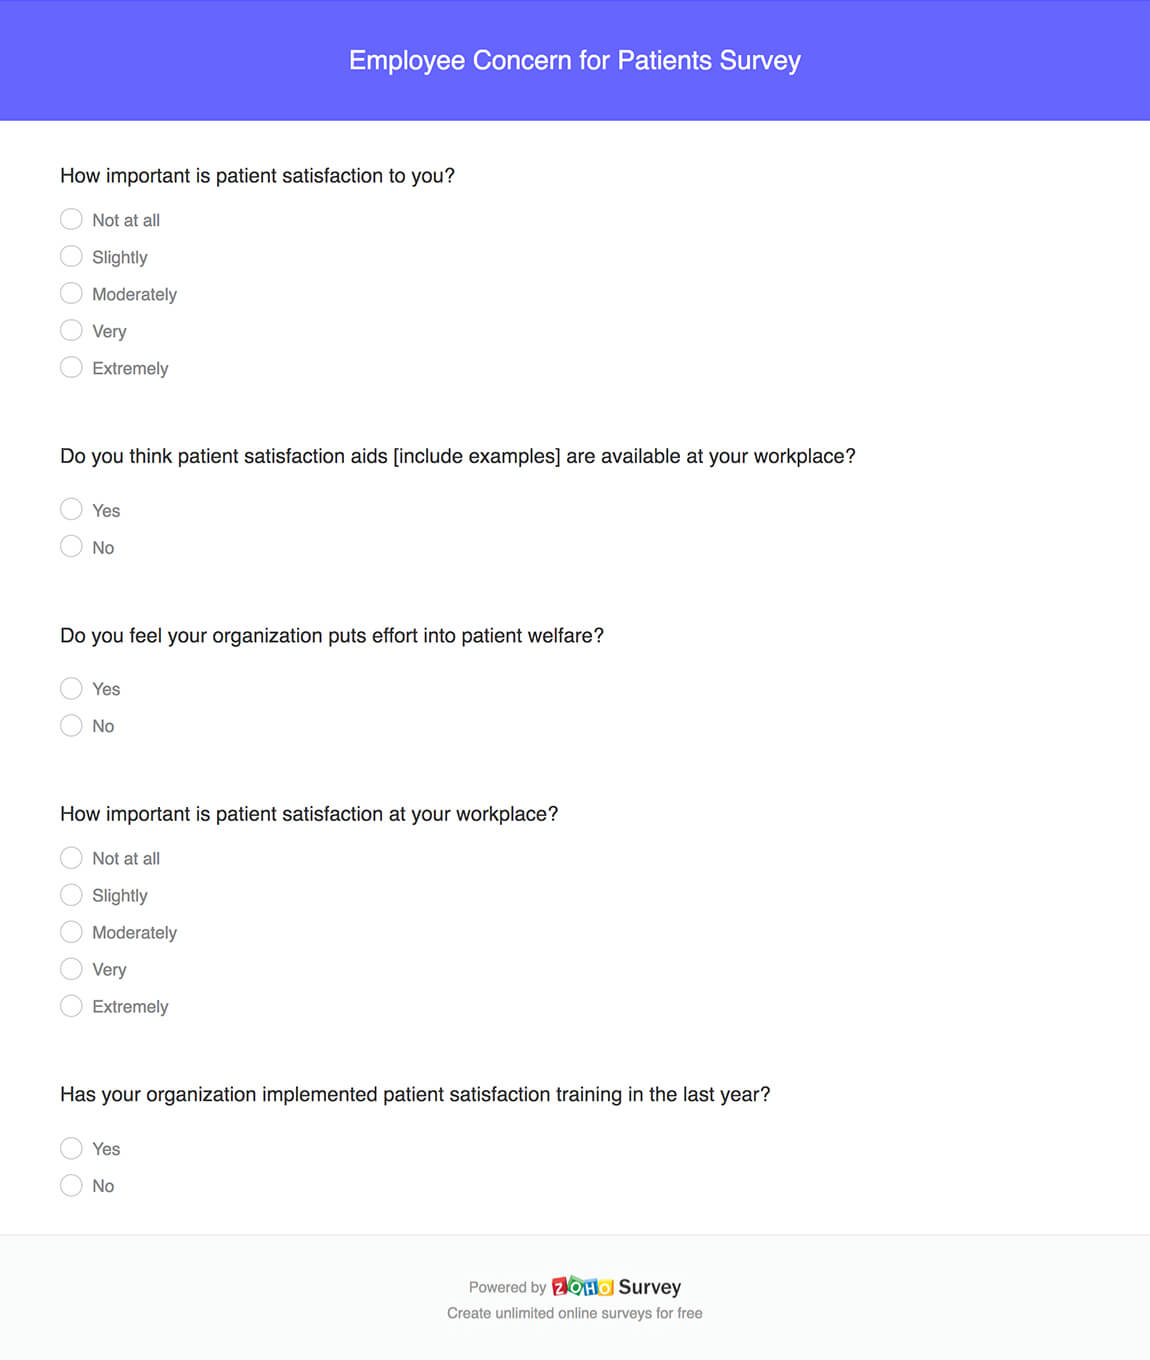 Employee concern for patients survey questionnaire template